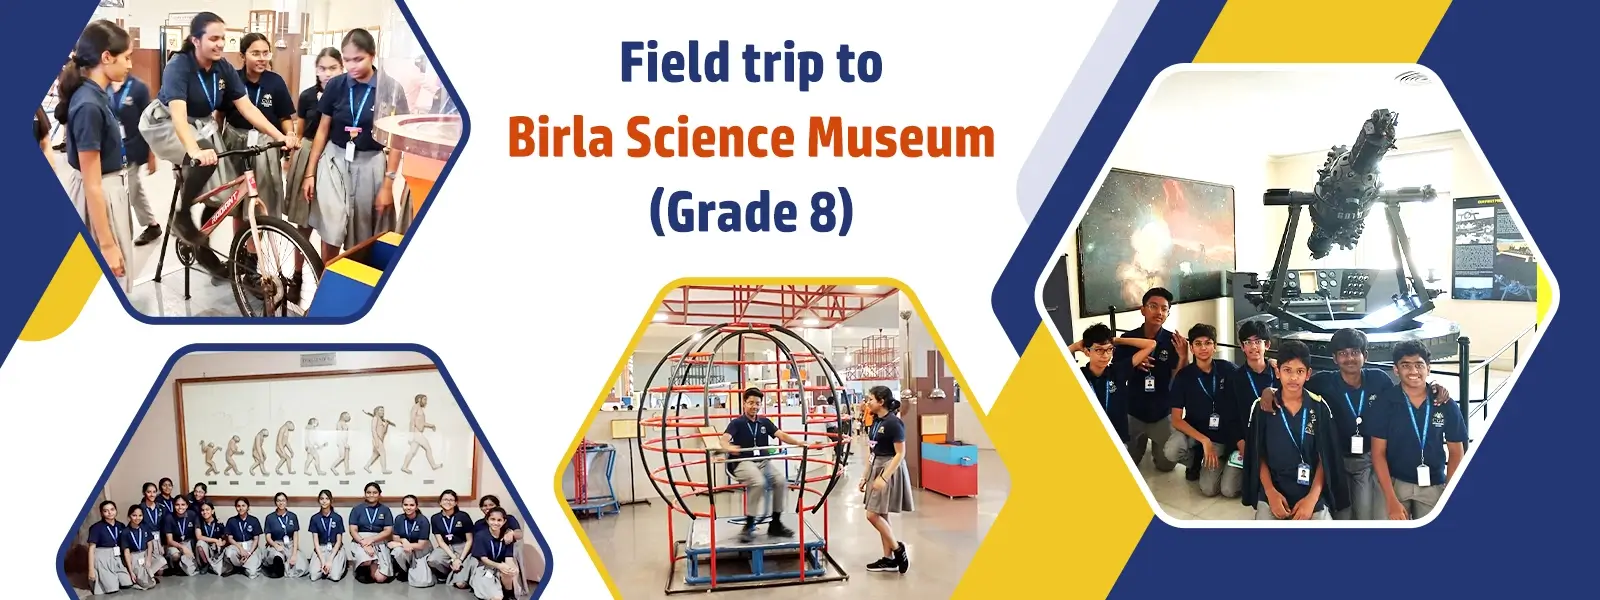 Field trip to Birla Science Museum  - CGR International School - Best School in Madhapur / Hyderabad